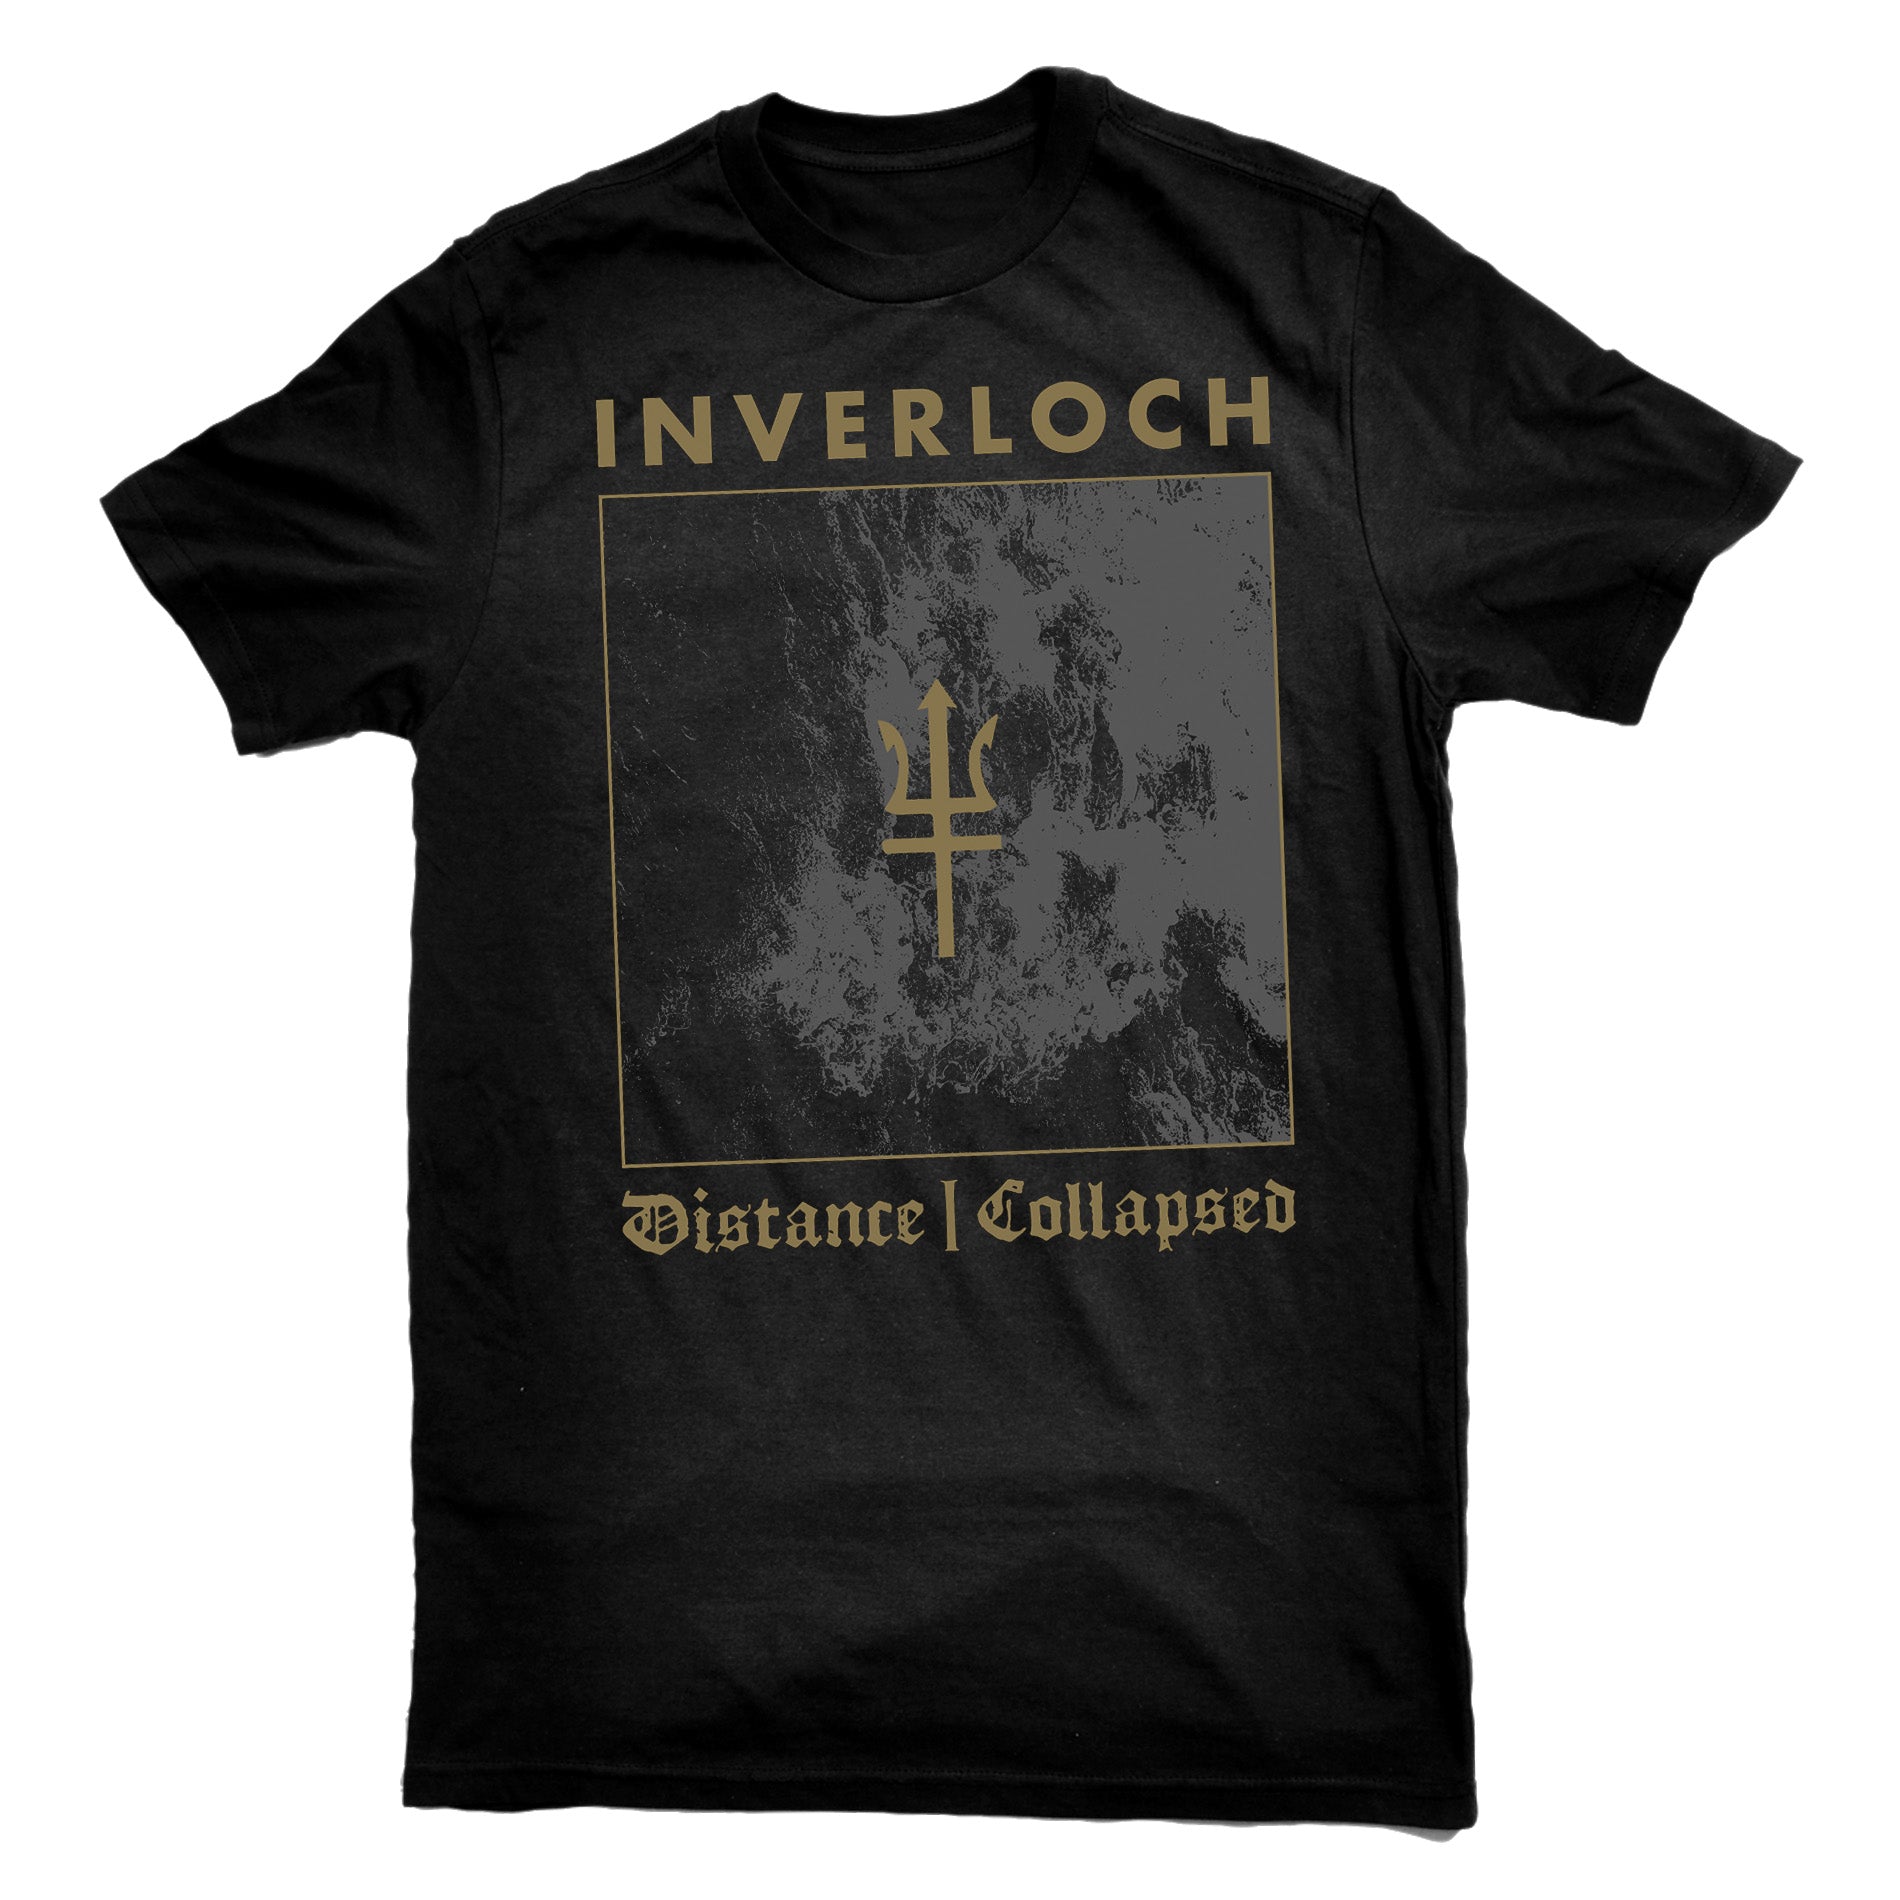 Inverloch "Distance | Collapsed" T-Shirt